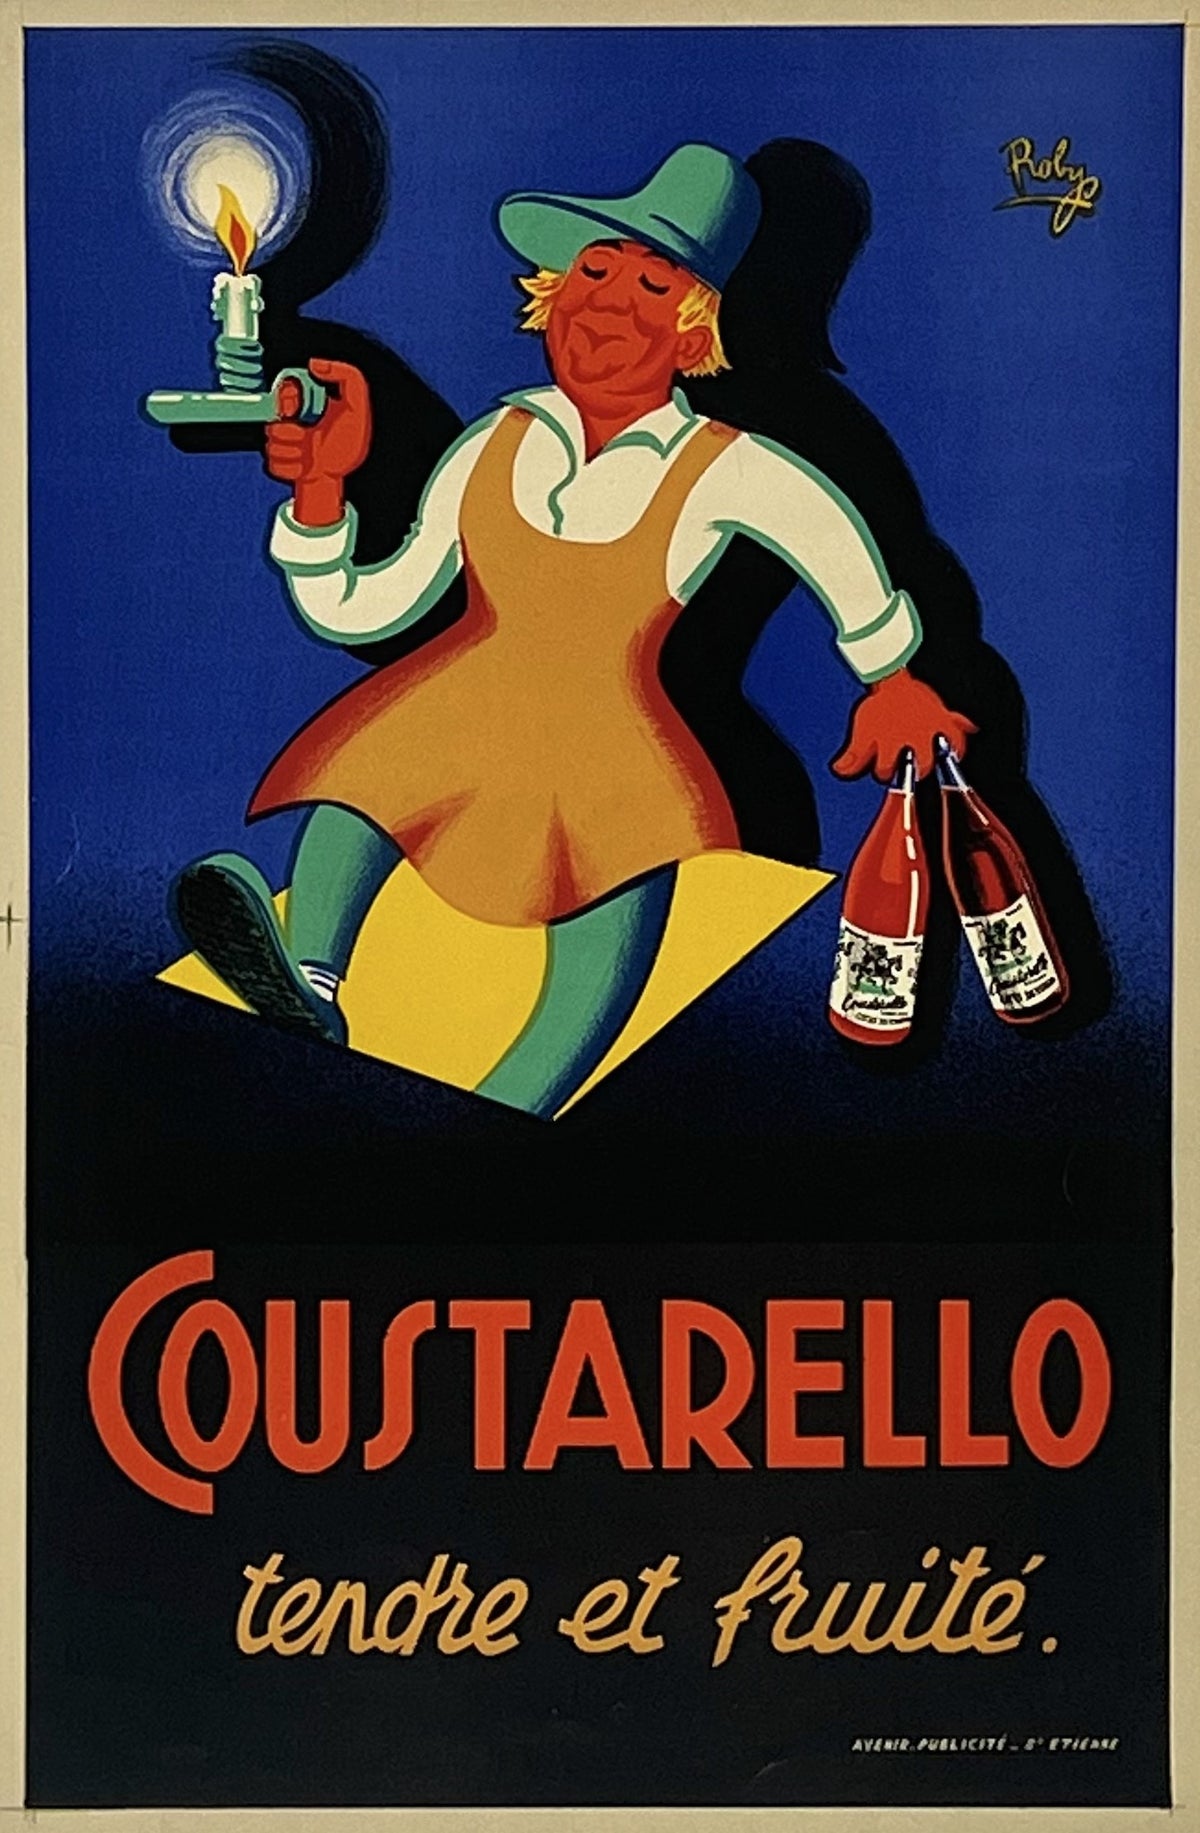 Coustarello - Authentic Vintage Poster